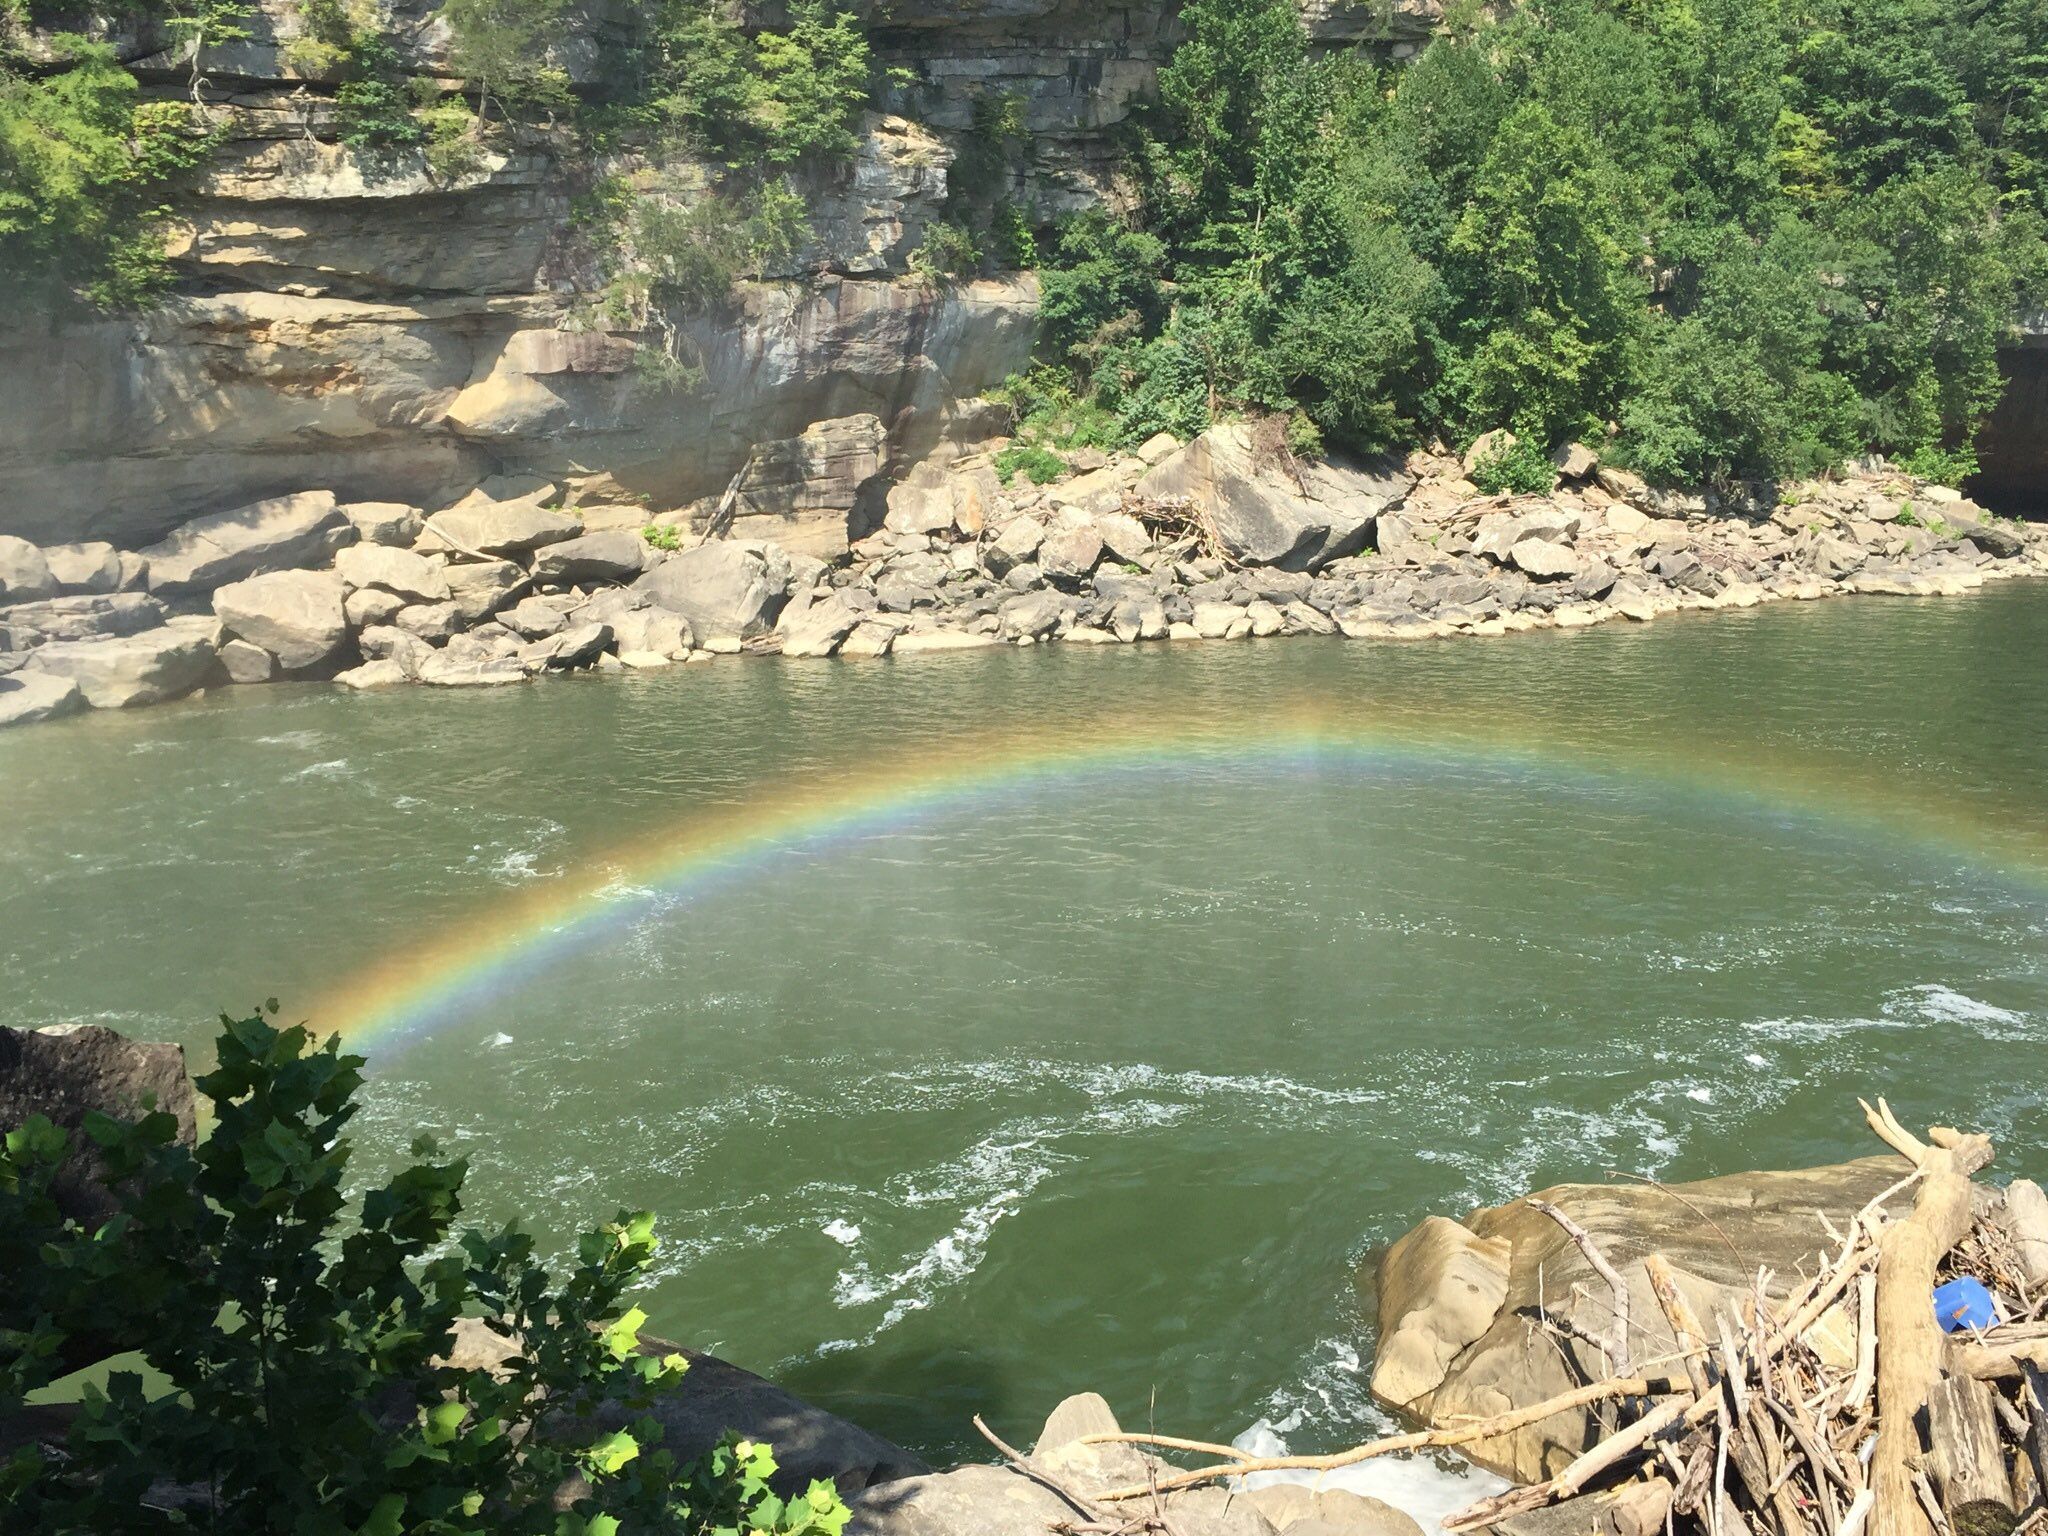 Larger rainbow downstream